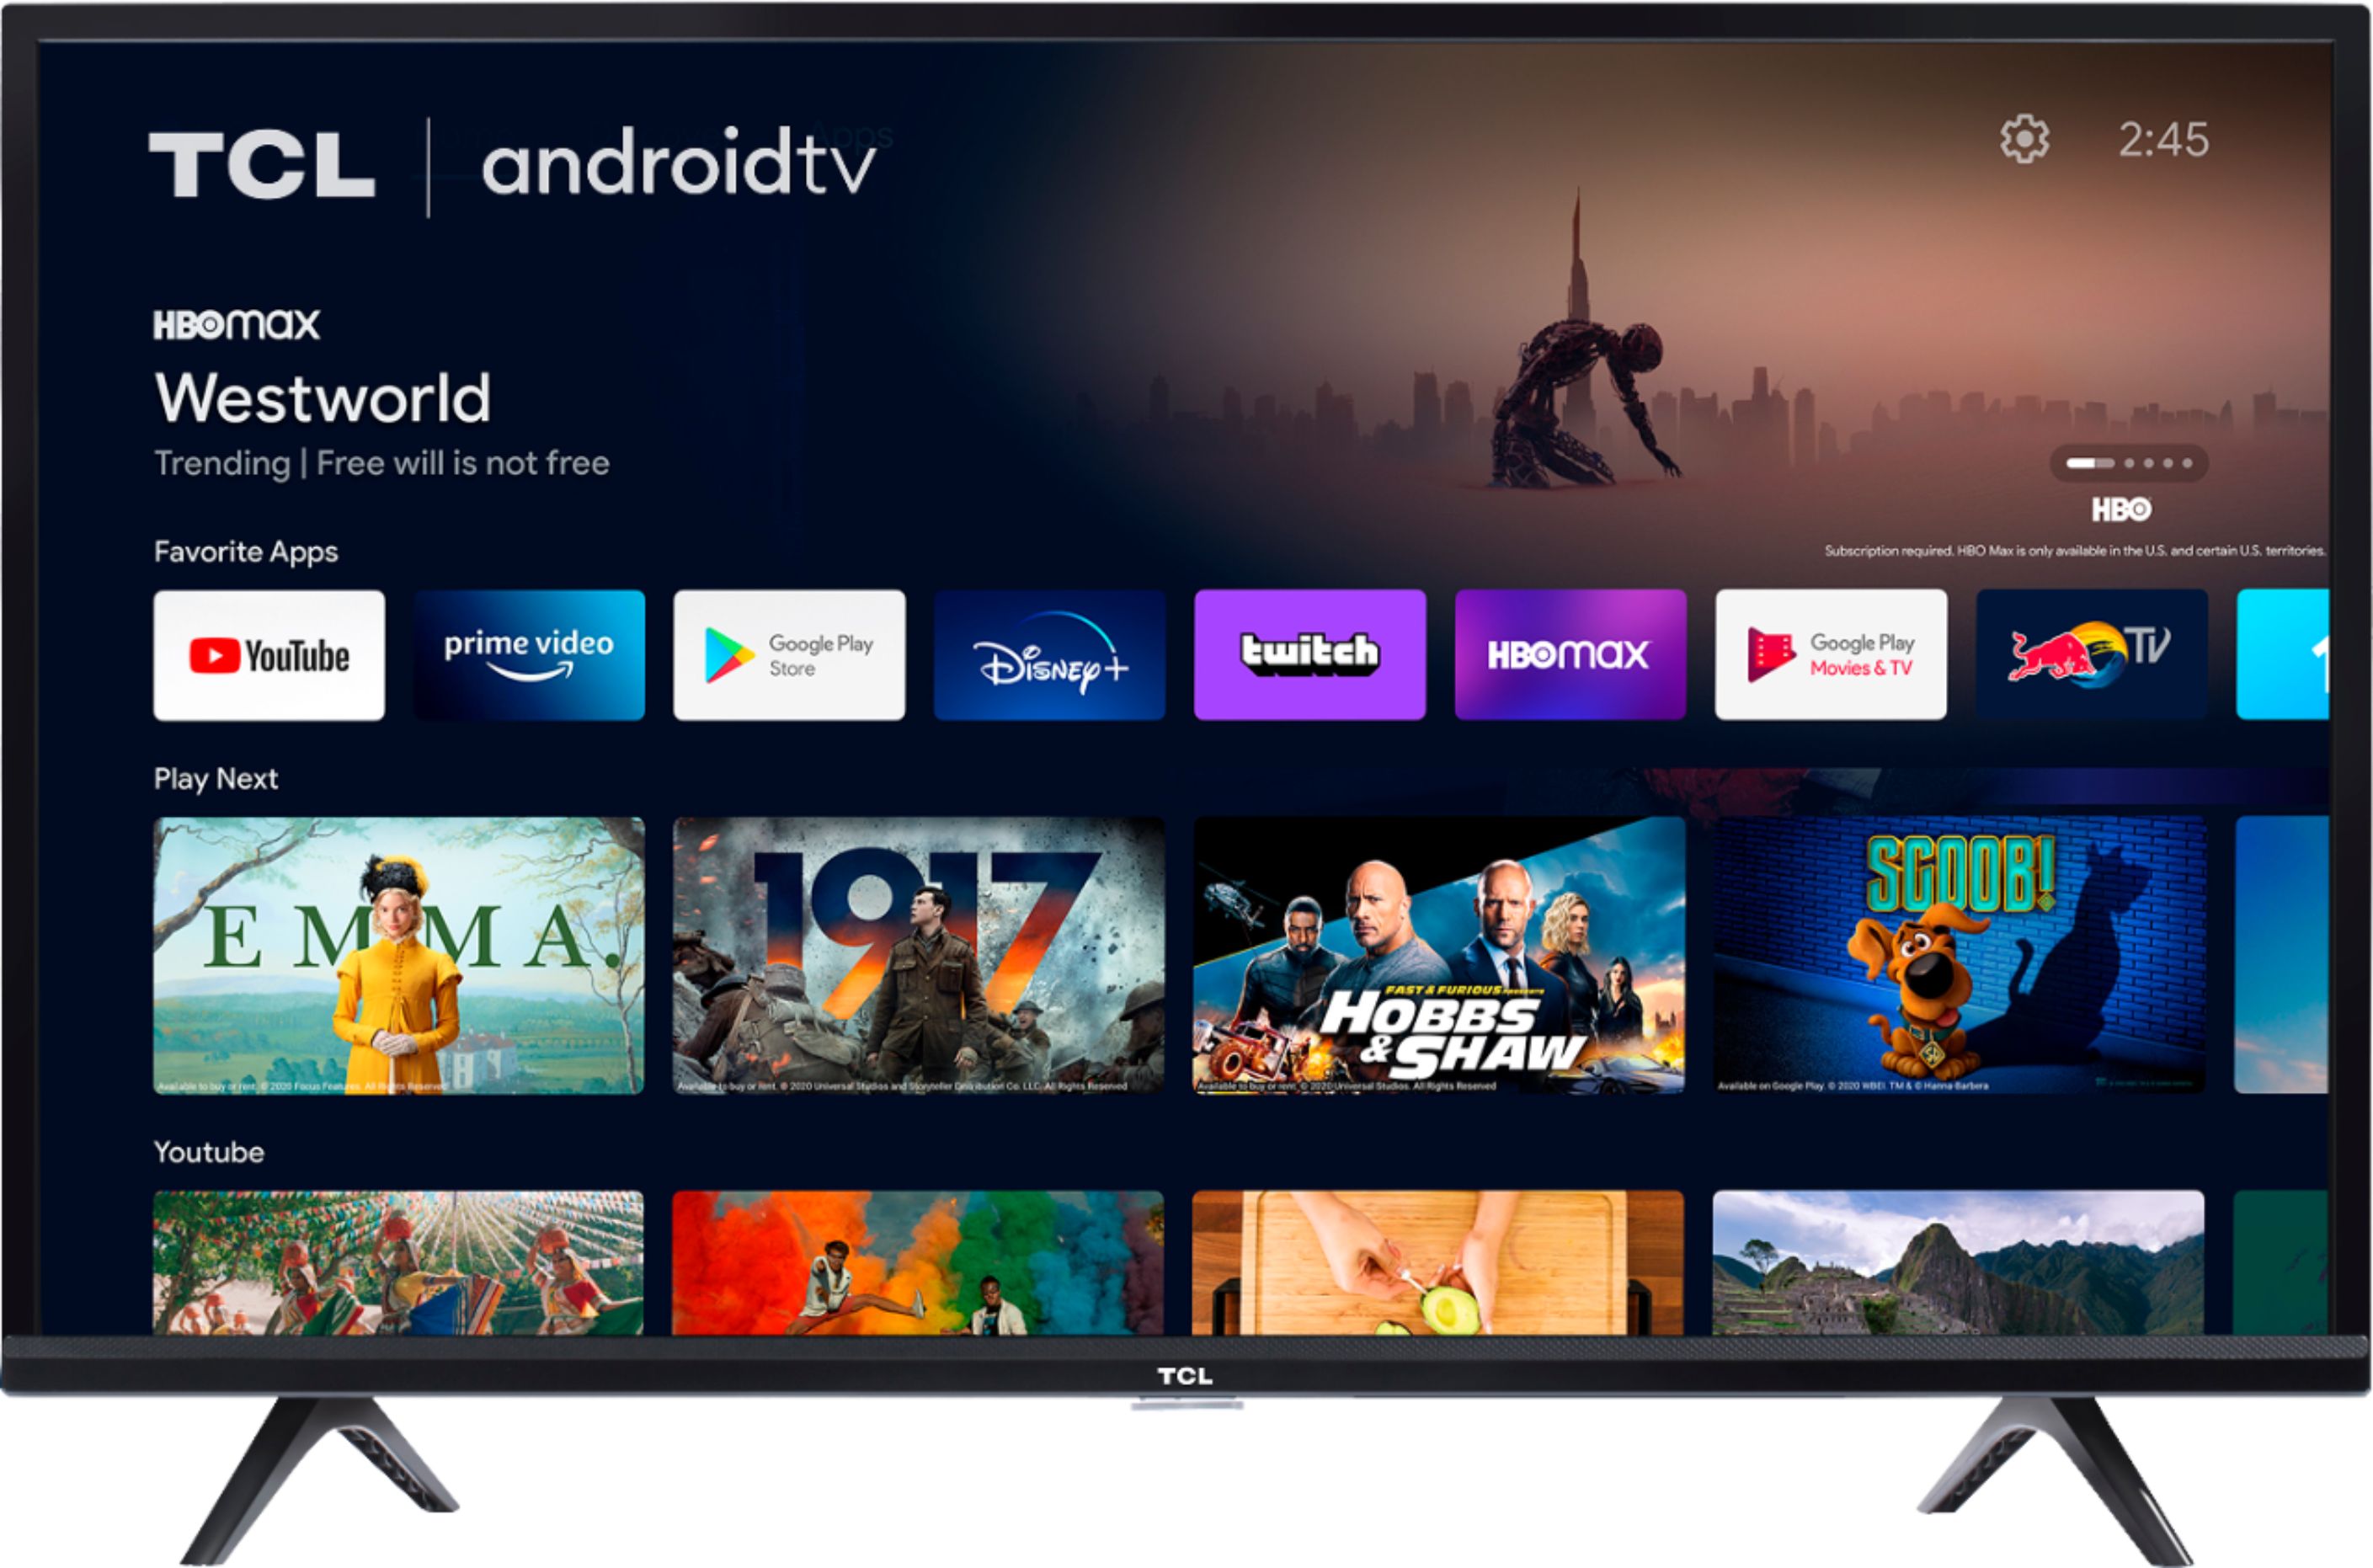 Spectrum TV App Android TV: Stream Live TV Anywhere